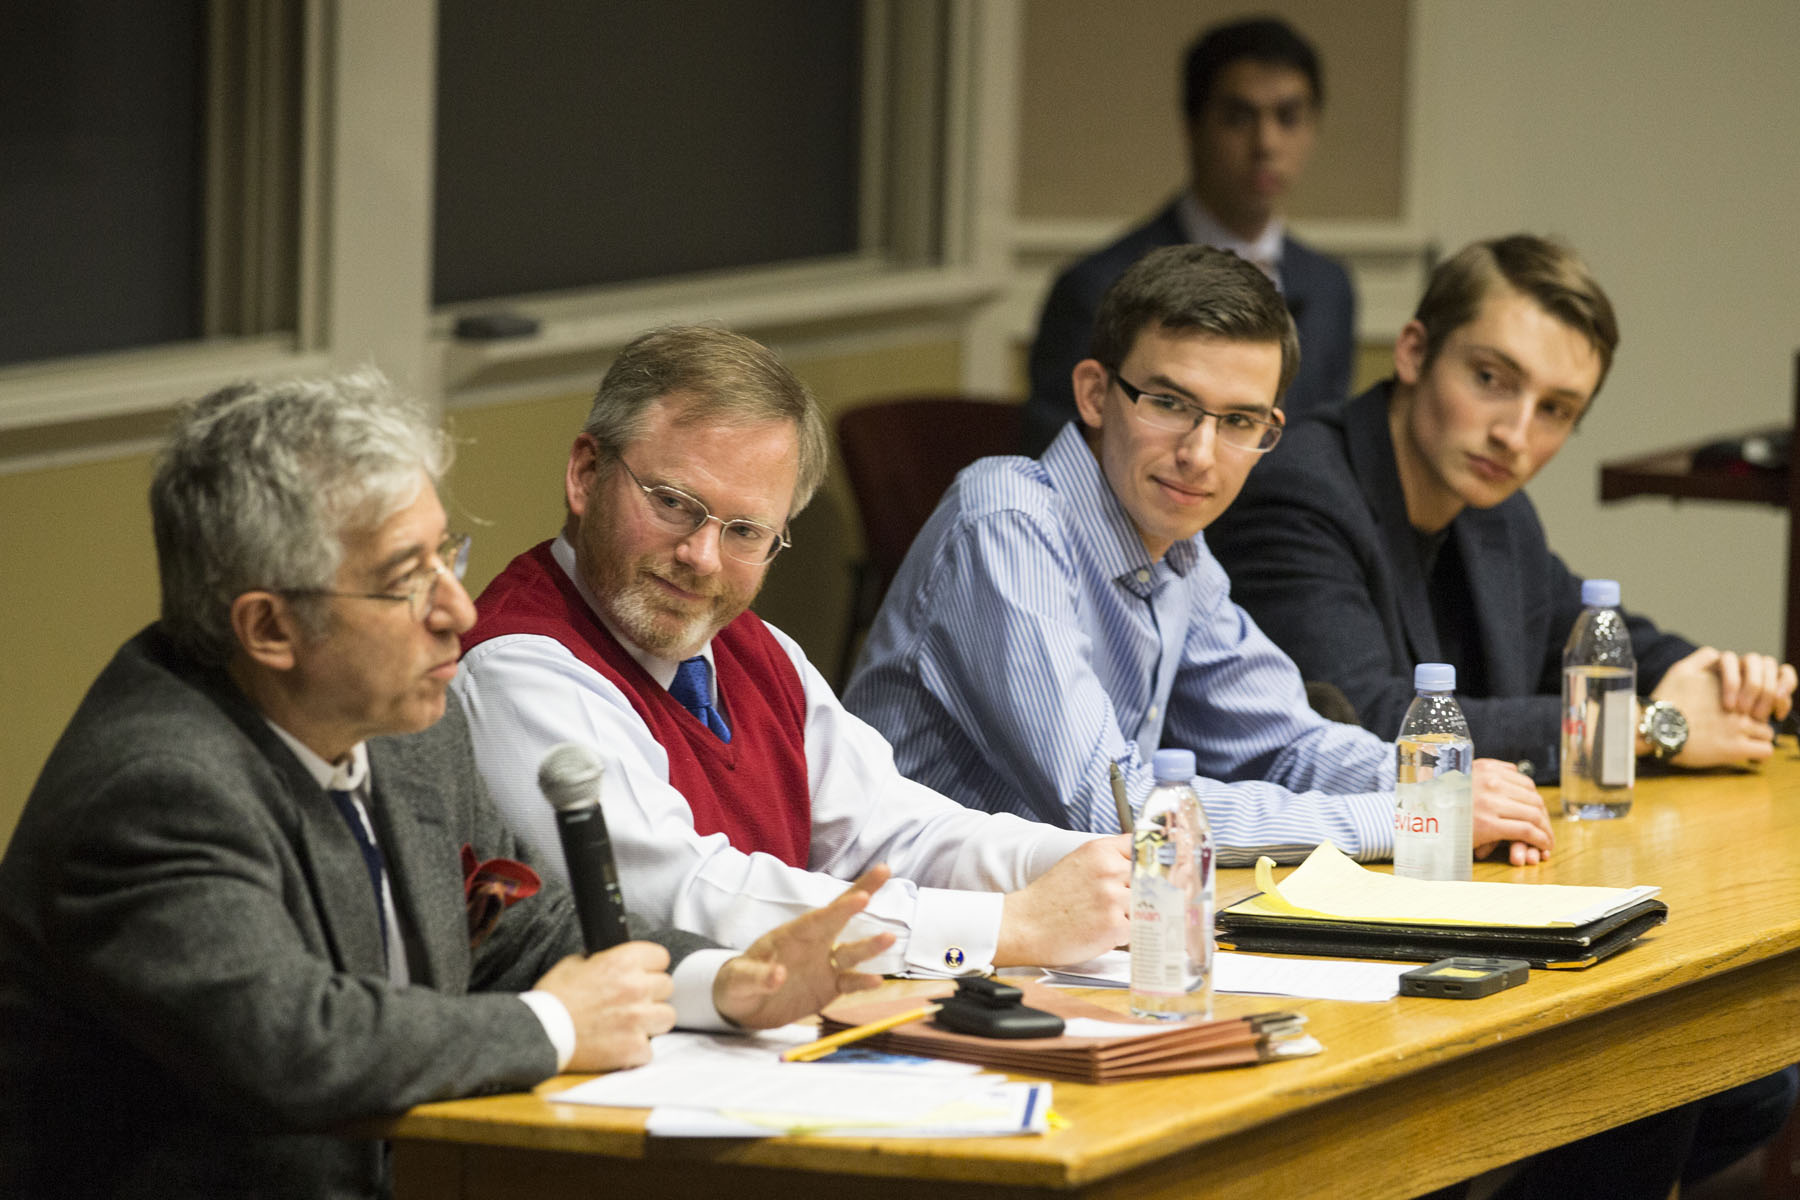 Panelists left to right: Leon Aron, James Greene, Mateo Diachok and Roman Gryniv